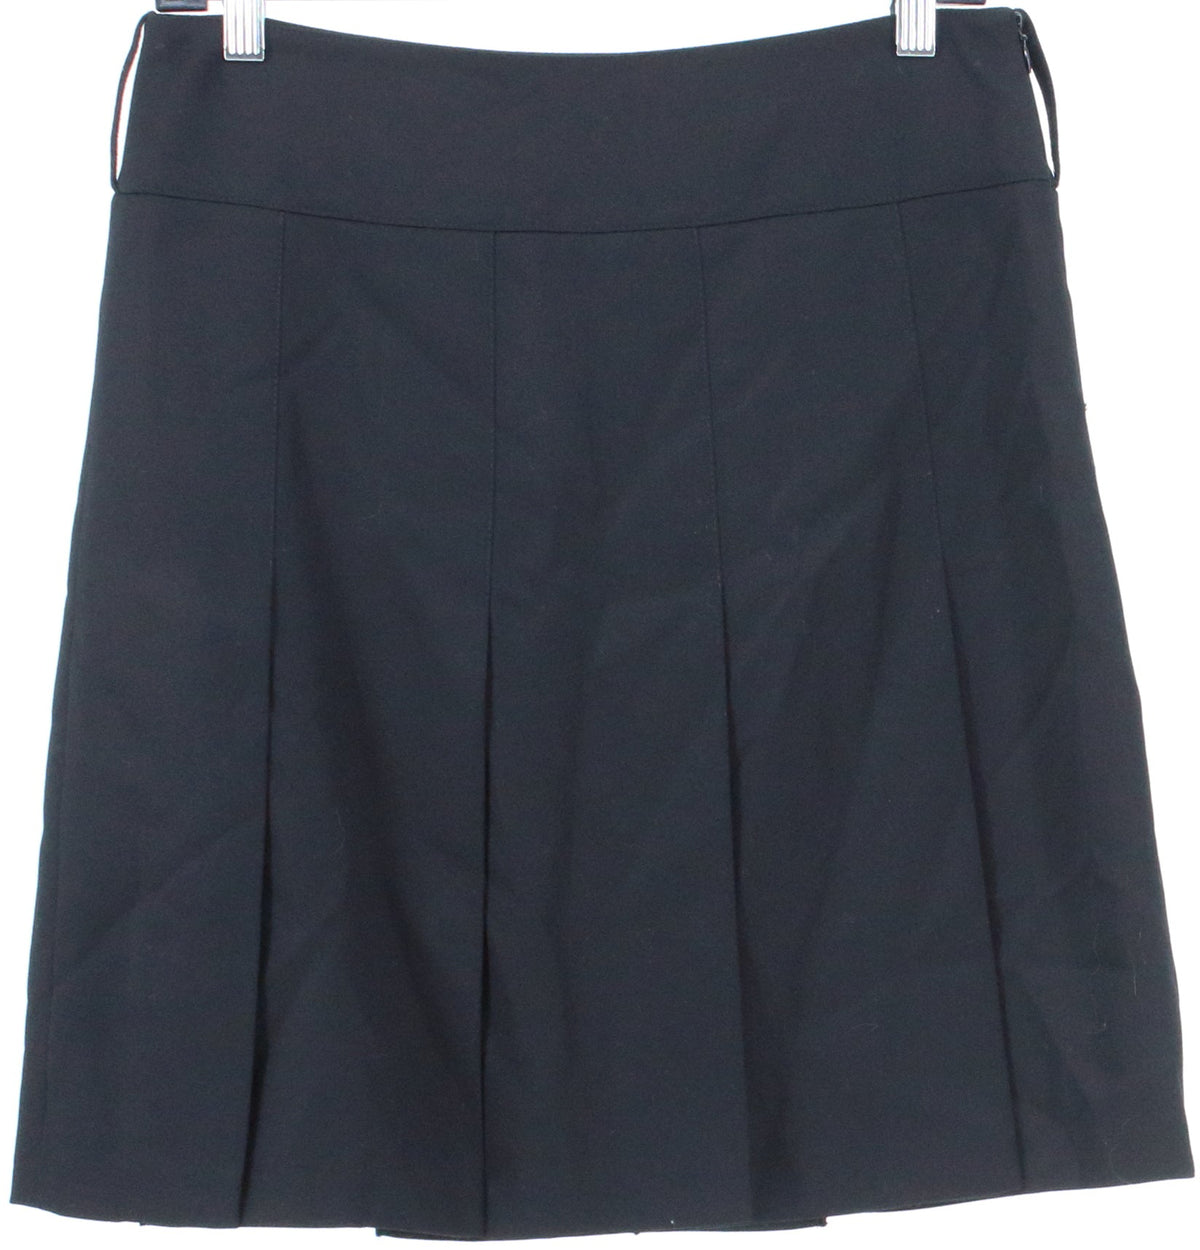 Burberry London Black Pleated Wool Skirt